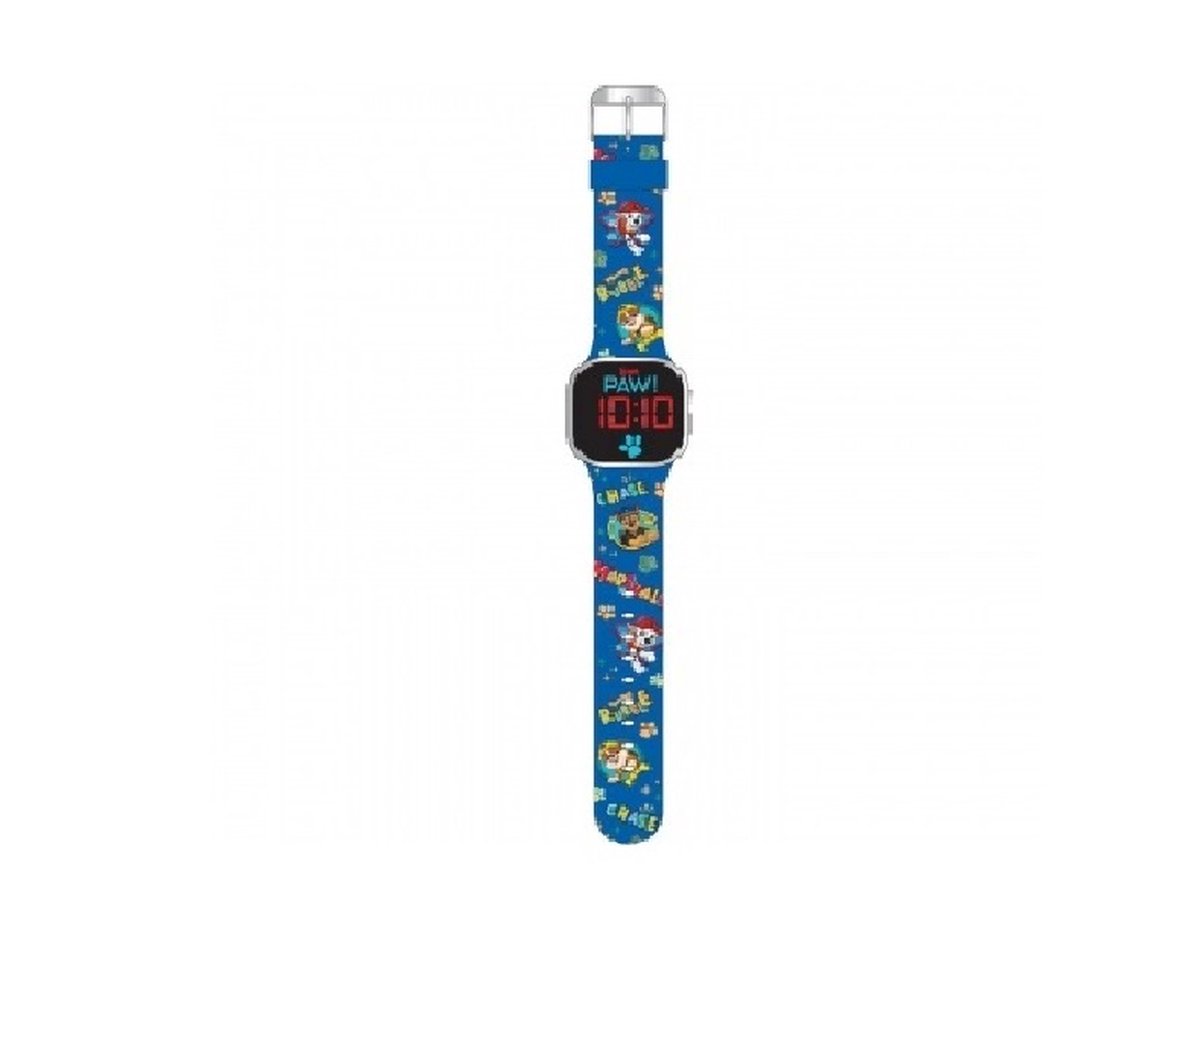 Paw Patrol Kinderhorloge - Kleur: Blauw - Thema: Paw Patrol - Digitaal Horloge voor Kinderen - LED Horloge - Paw Patrol - Chase PawPatrol - Verjaardag Cadeau - Horloge voor Jongens Meisjes - Klok Kijken Leren voor Kids - Klokkijken Digitaal Horloge